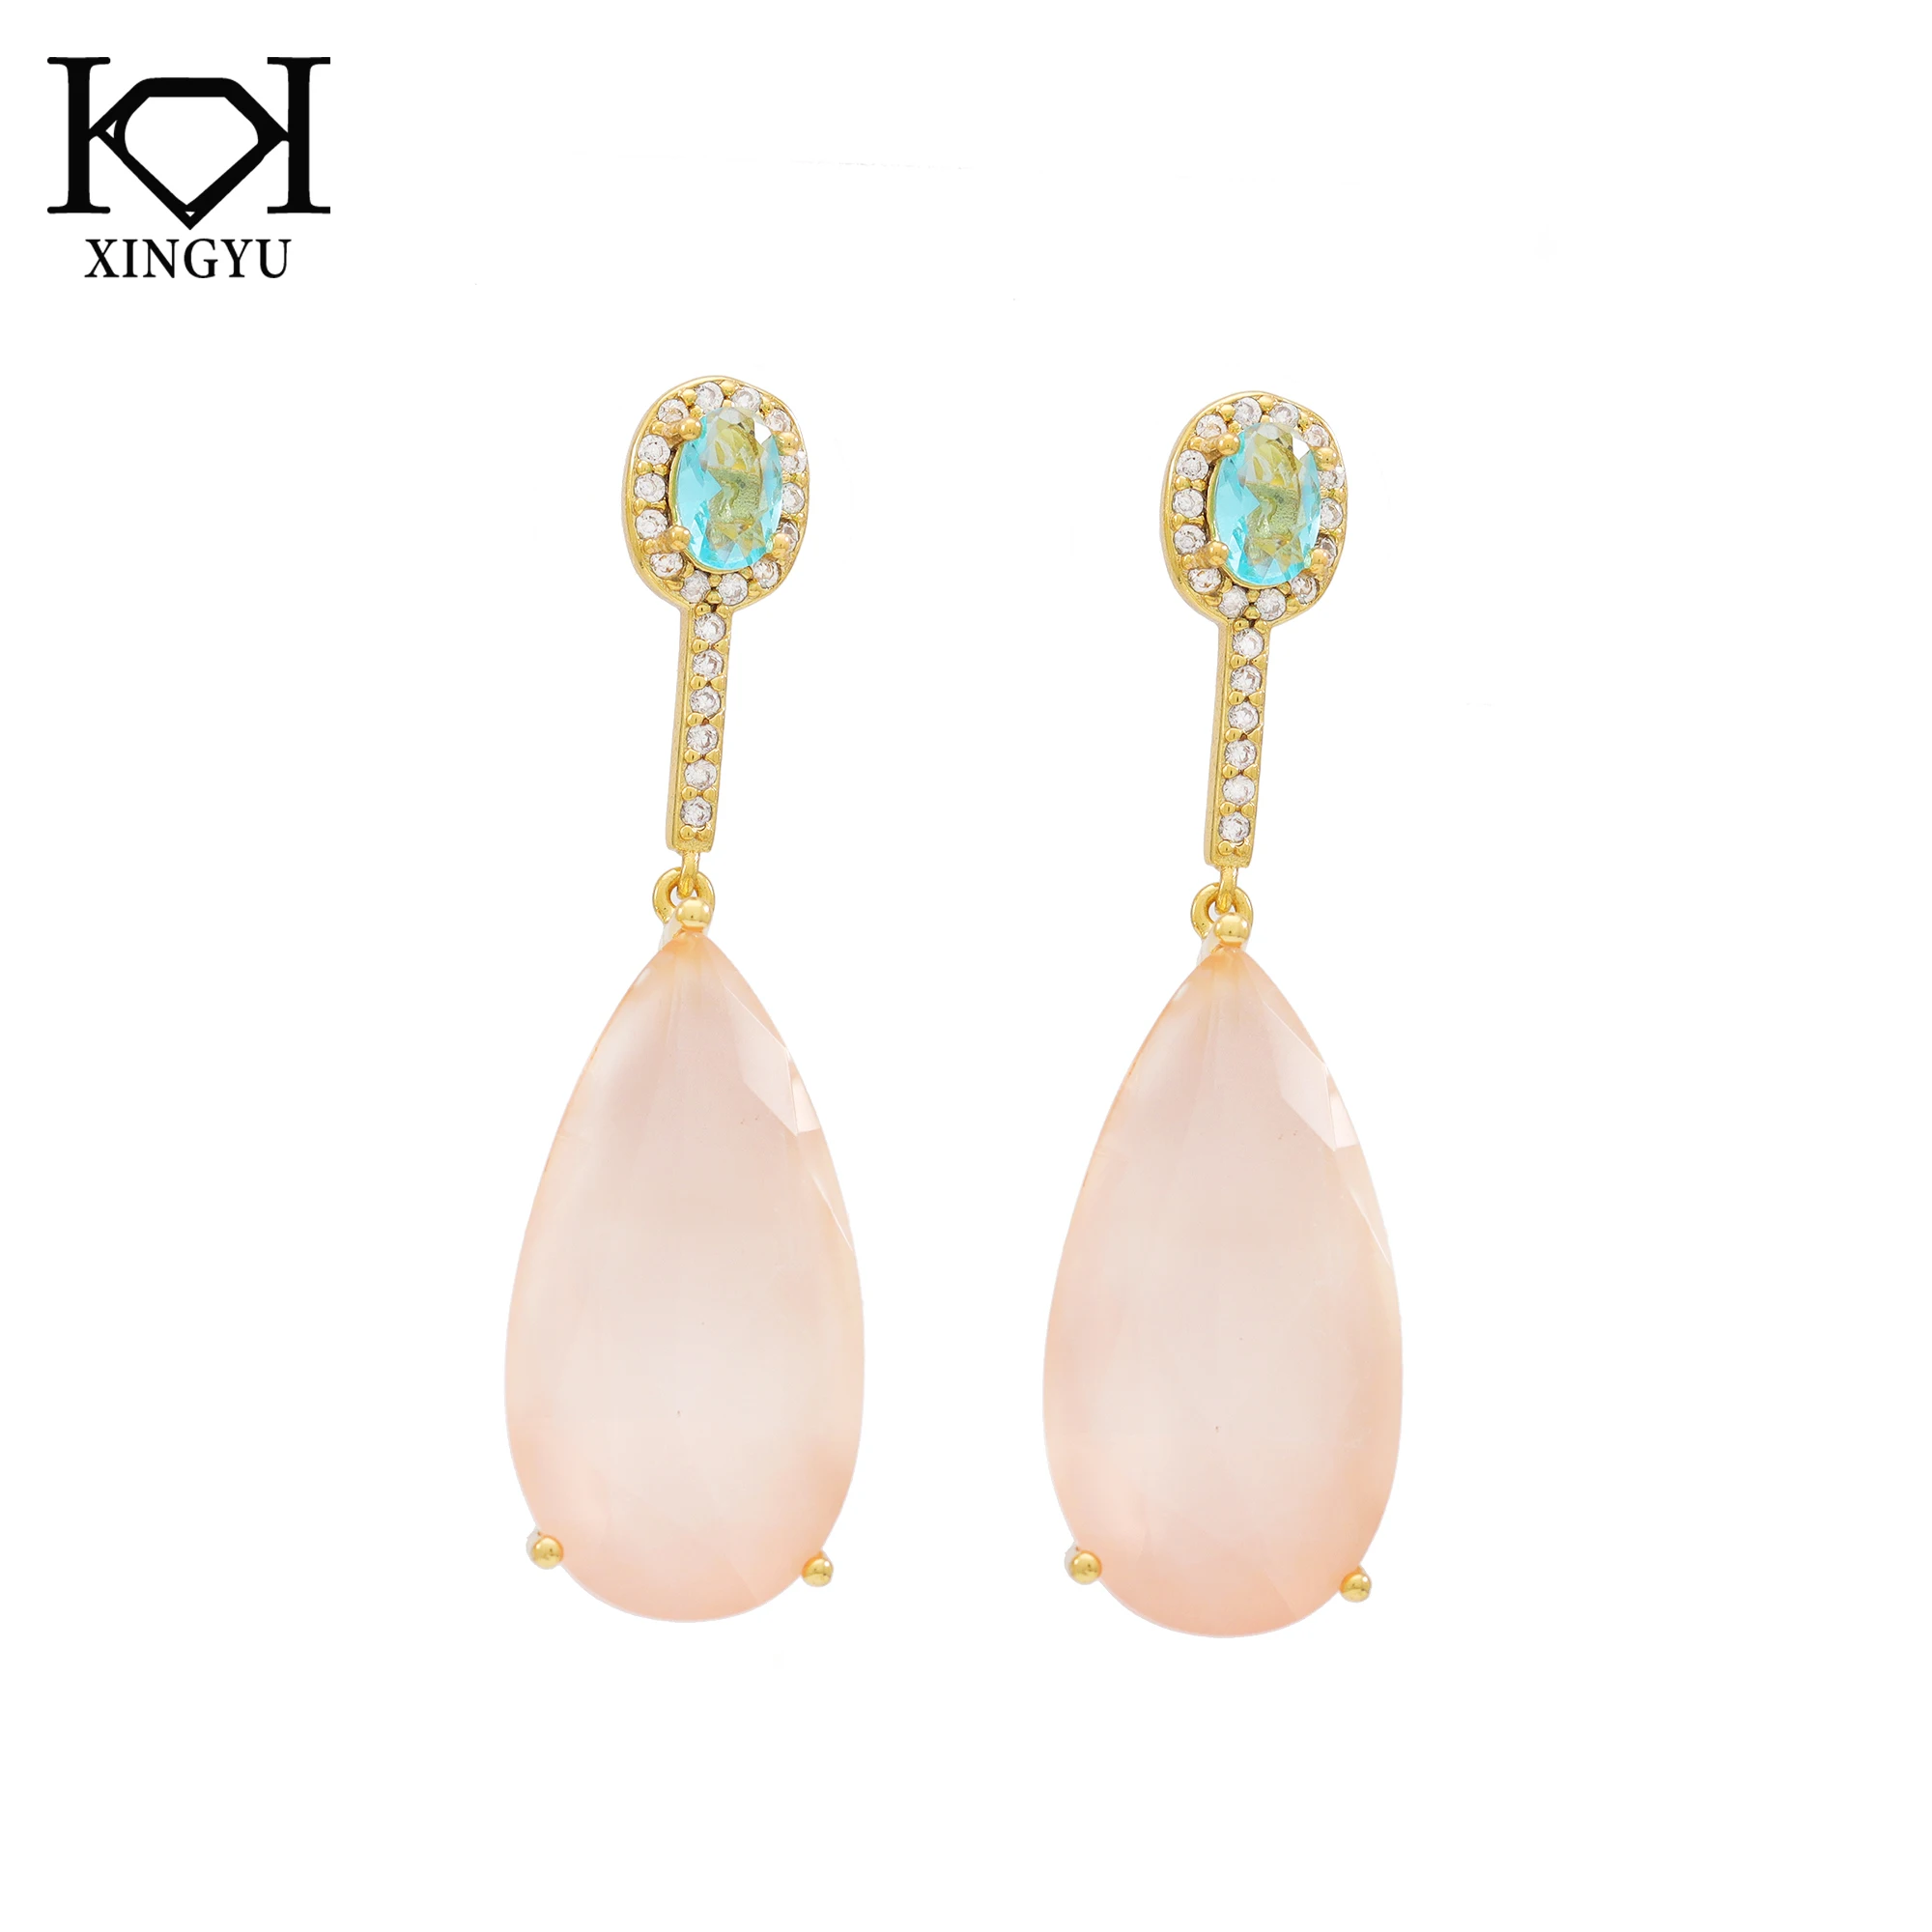 New arrival big semi - precious stones crystal teardrop drop earrings for women